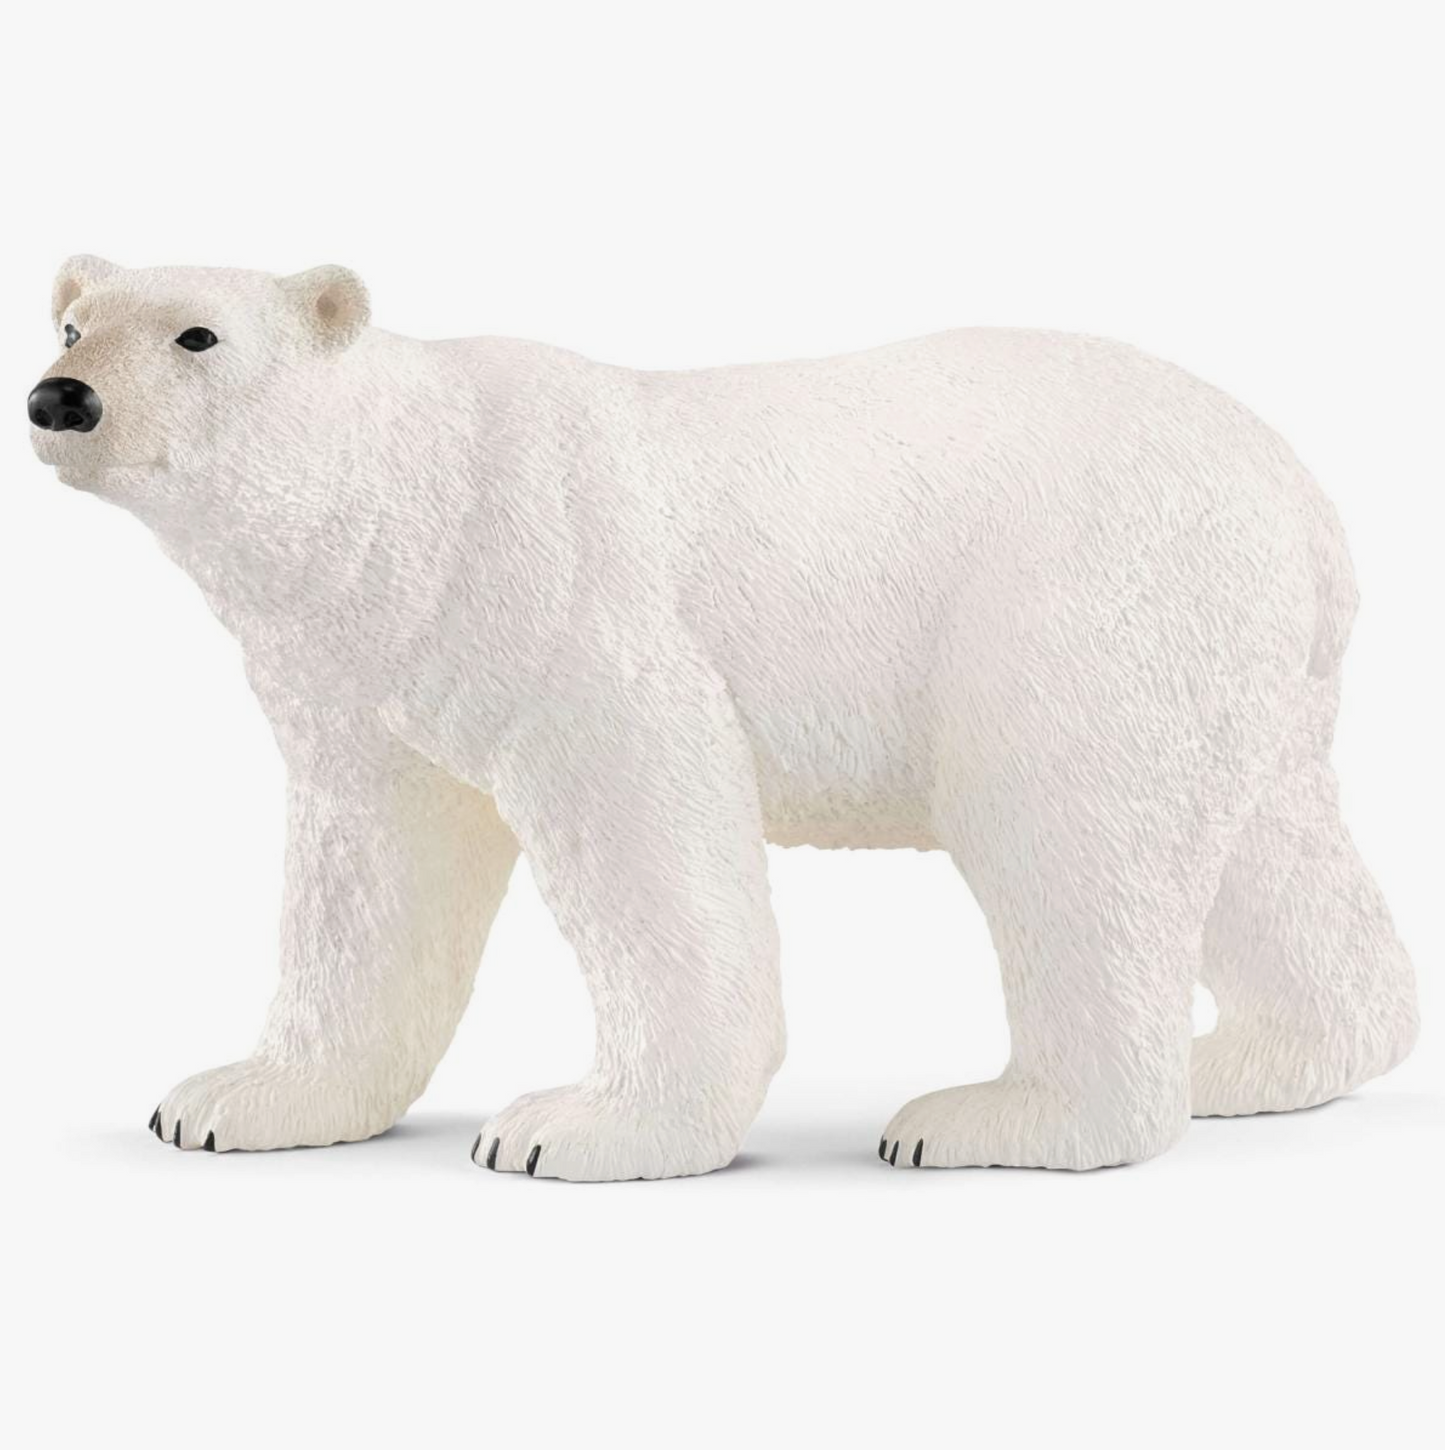 Polar Bear Arctic Animal Toy